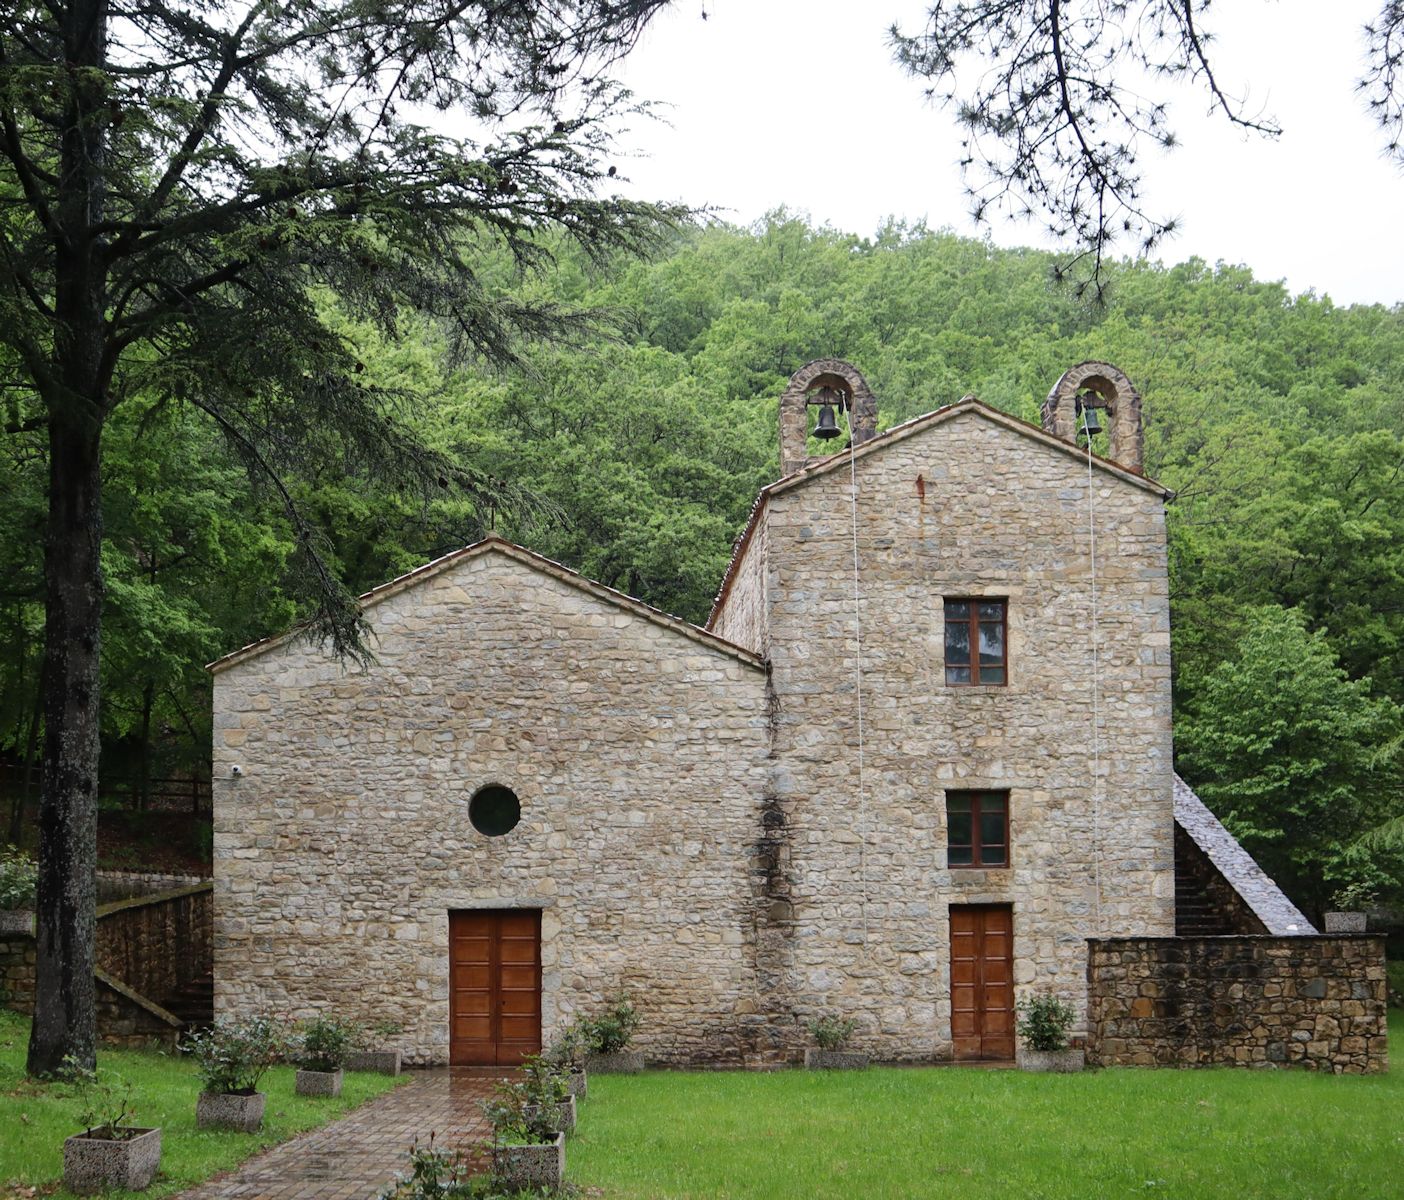 ehemaliges Benediktinerkloster Santa Maria Mater Domini in Fraine, heute ein Marien-Wallfahrtsort